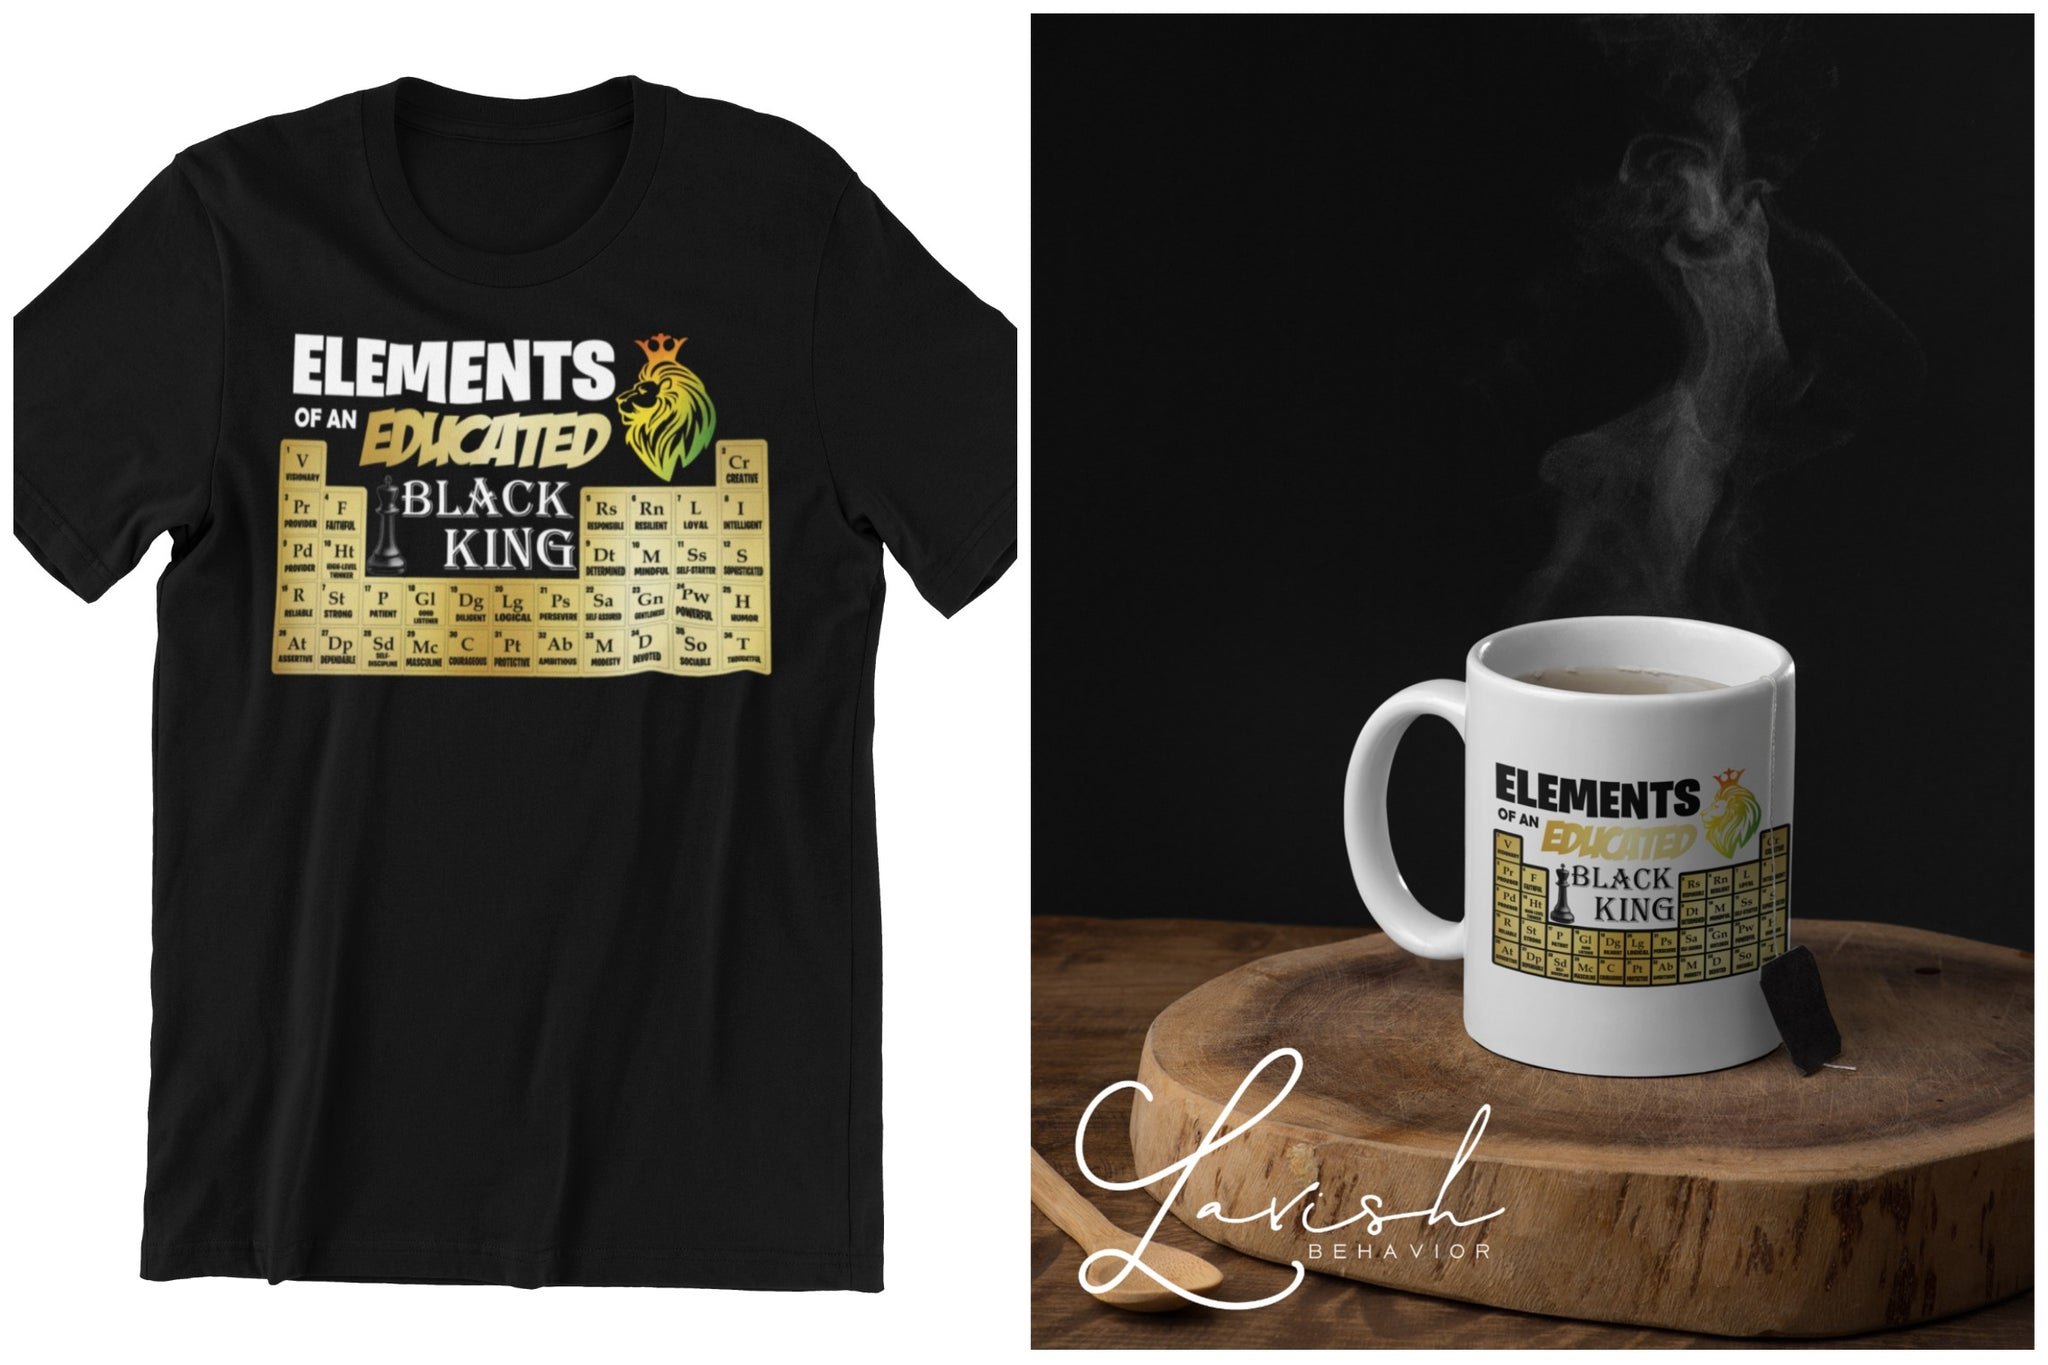 Elements of a Black Educated King Tshirt and Mug